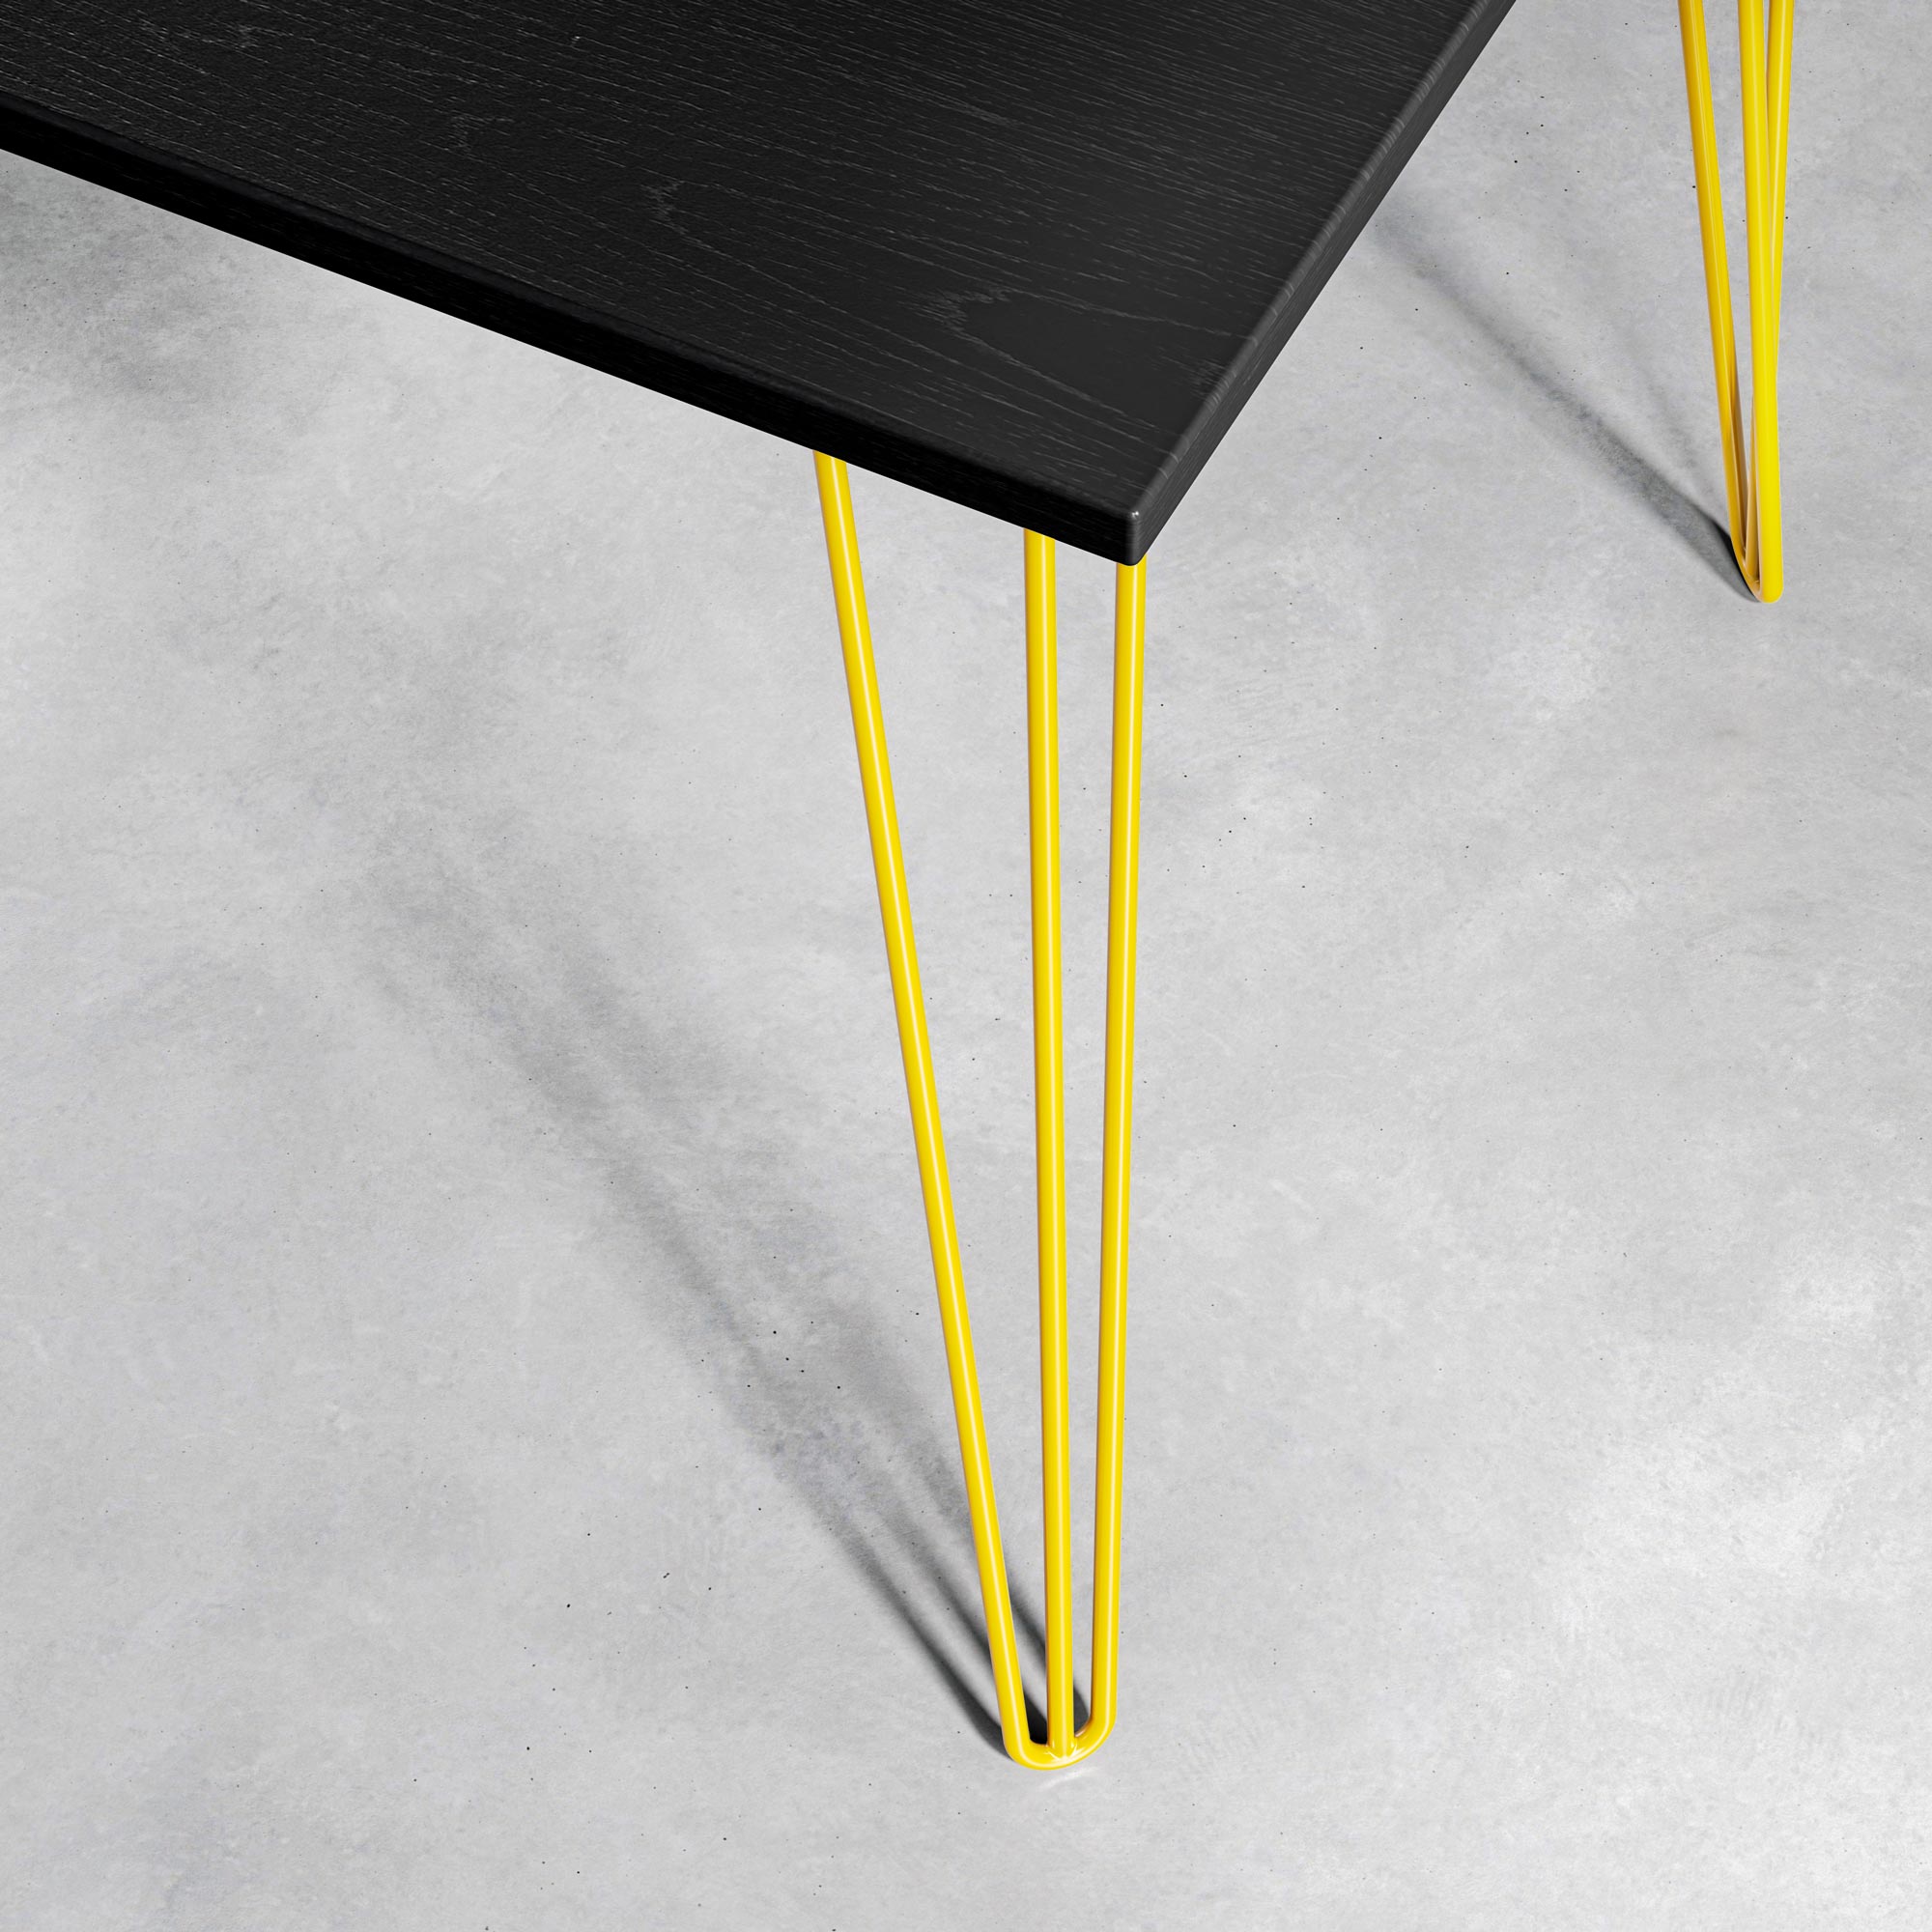 Black Ash Hairpin Table-Small (60cm x 120cm)-Yellow-The Hairpin Leg Co.